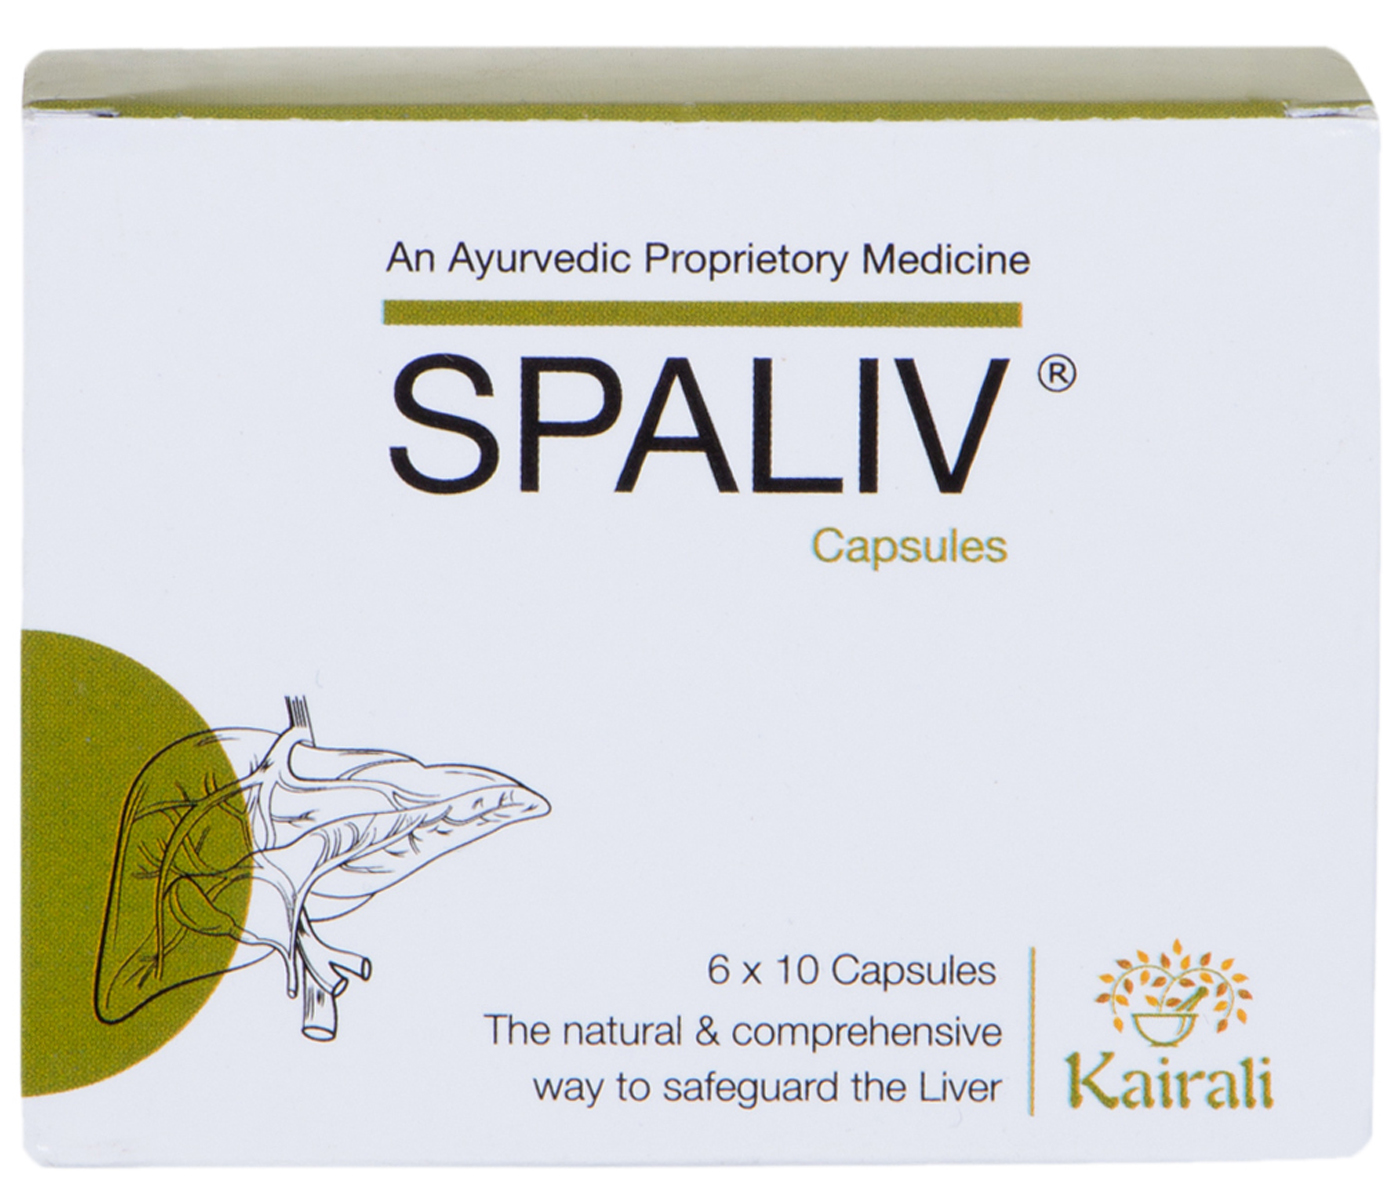 Buy Kairali Spaliv Capsule at Best Price Online